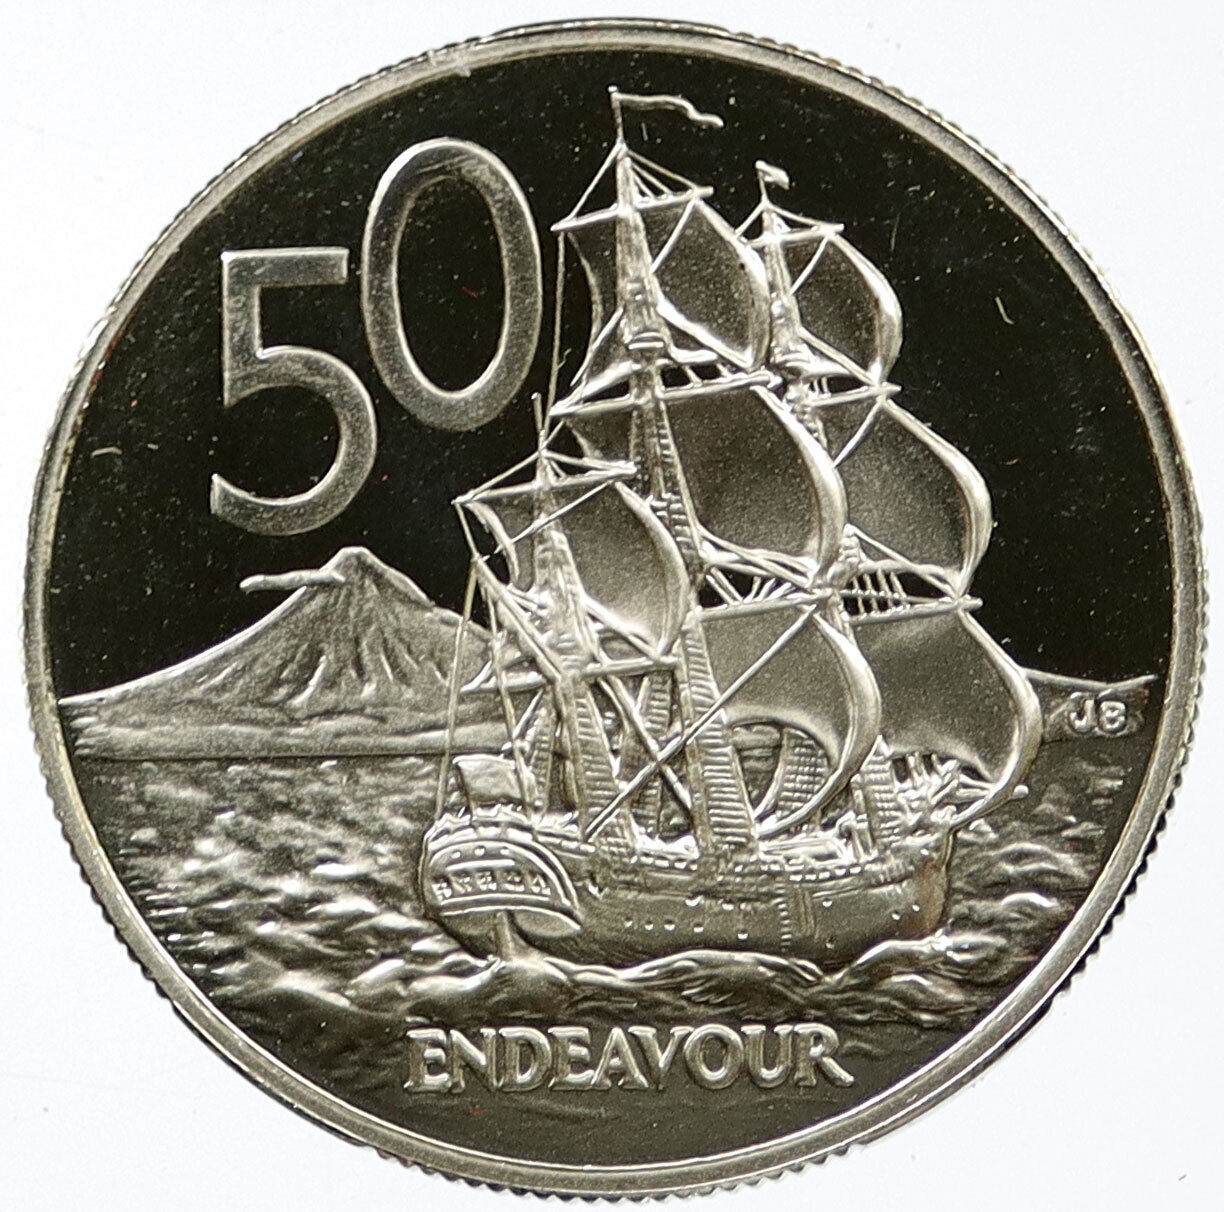 1988 NEW ZEALAND Elizabeth II HMS ENDEAVOR SHIP Proof 50 Cent Coin i116007